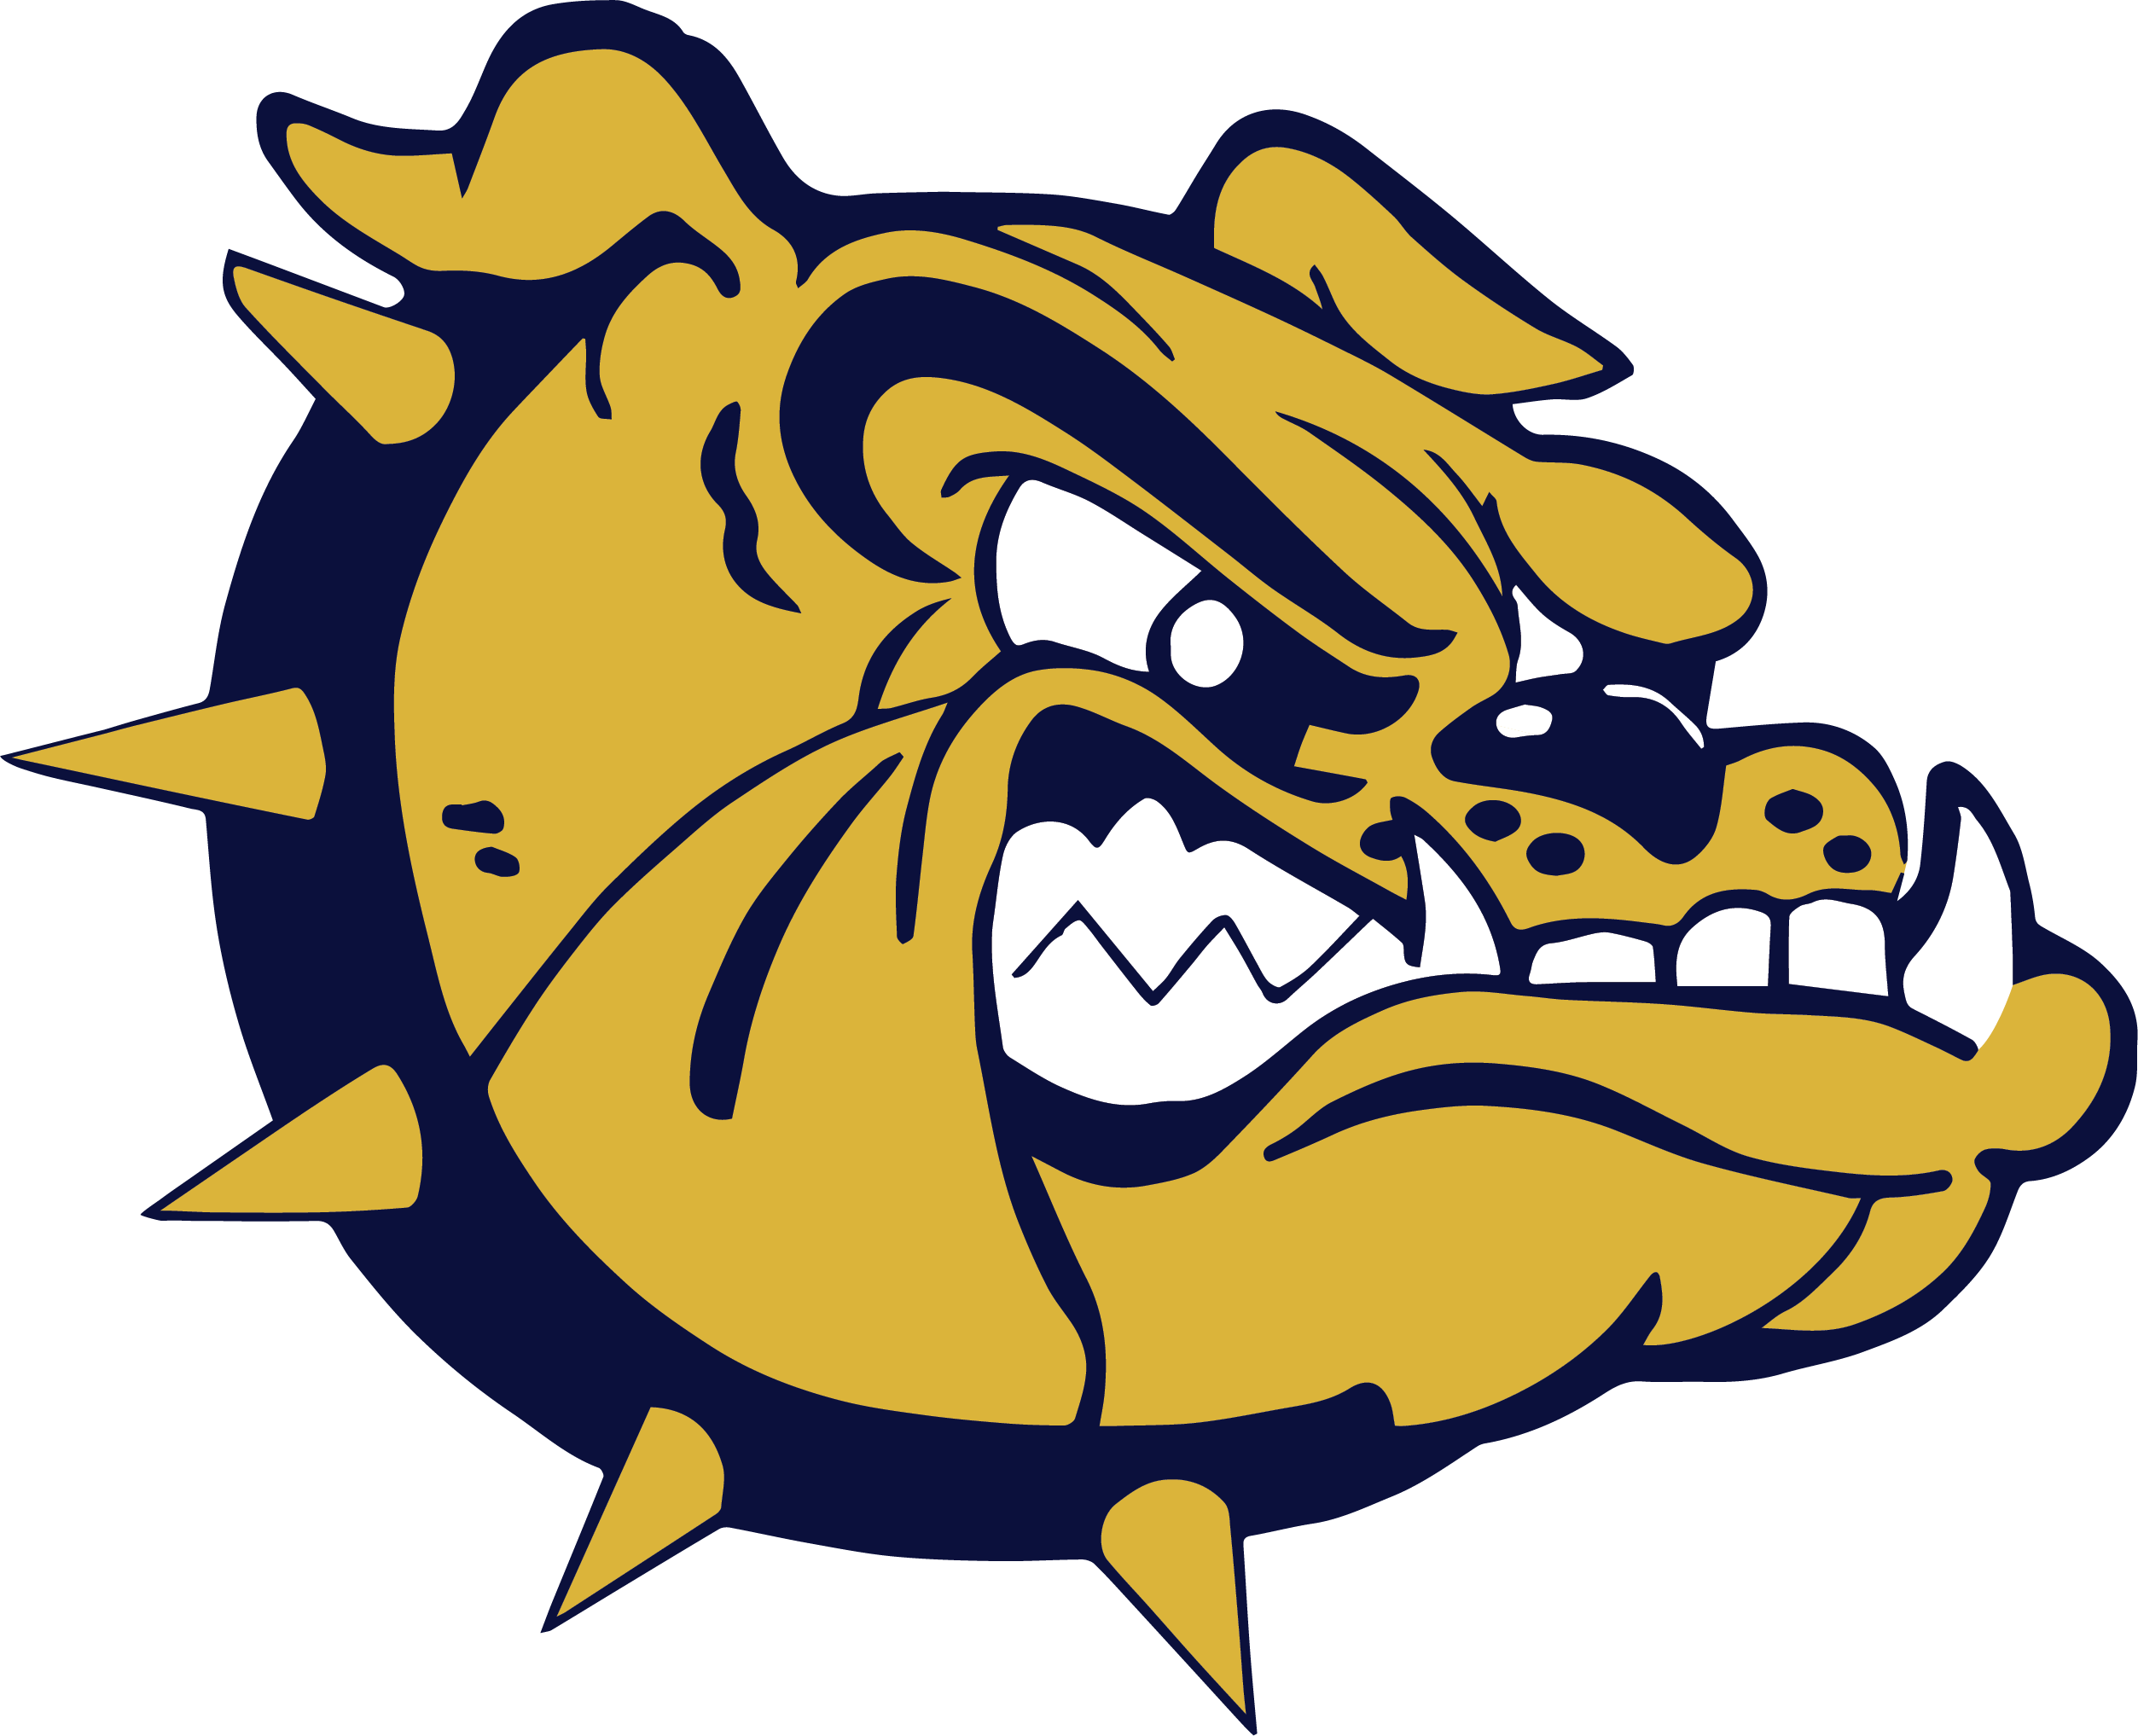 Hylton High School bulldog logo